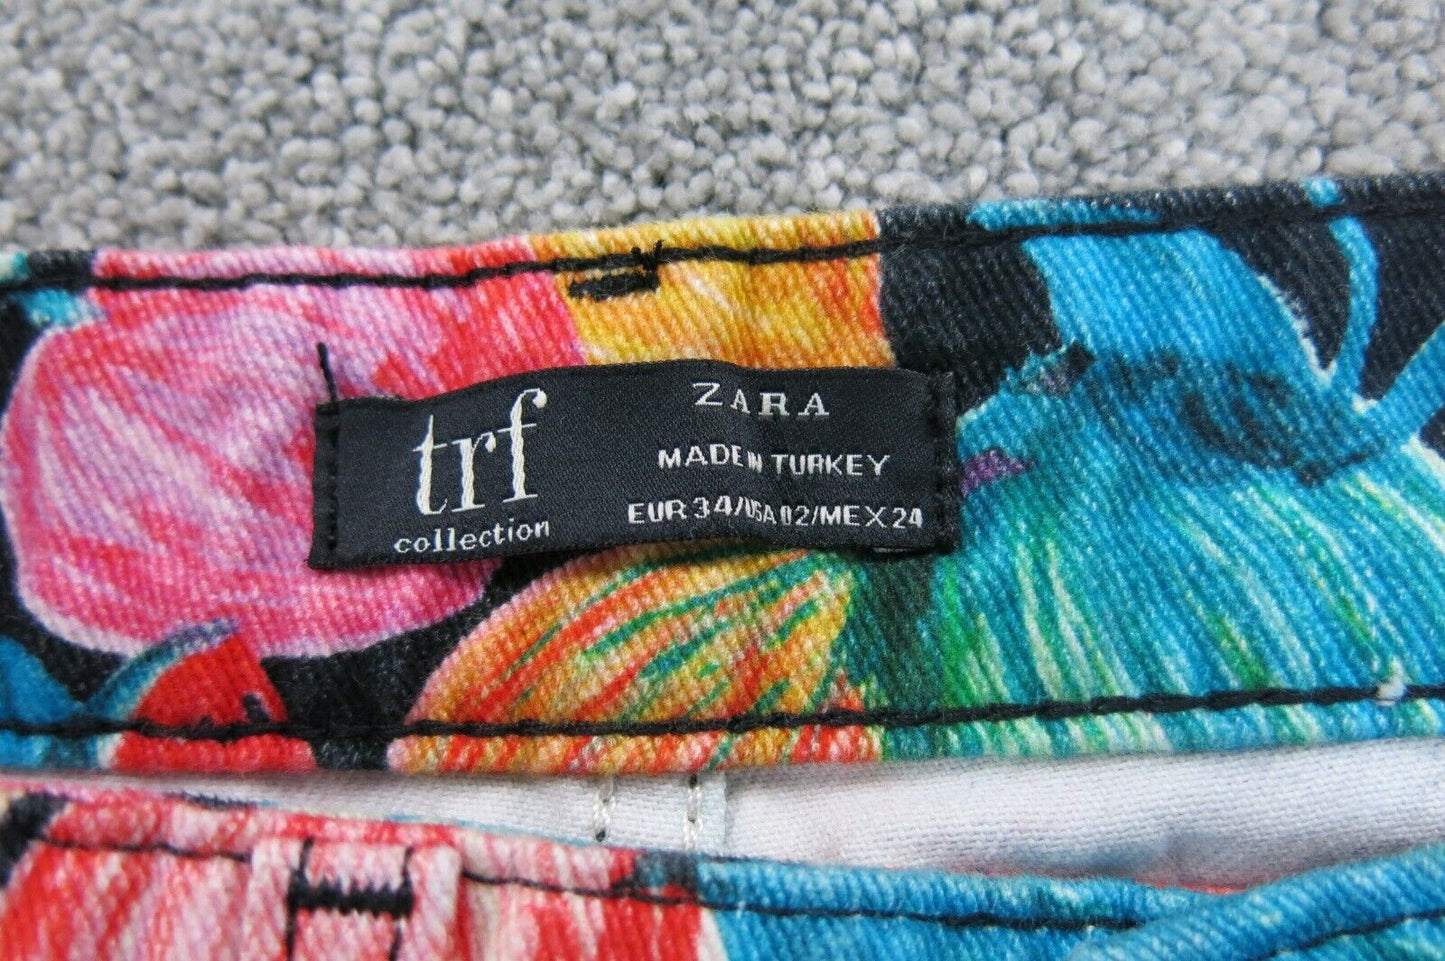 Zara Trf Collection Women Cut Off  Denim Shorts Pockets Fruit Print Red Black 02